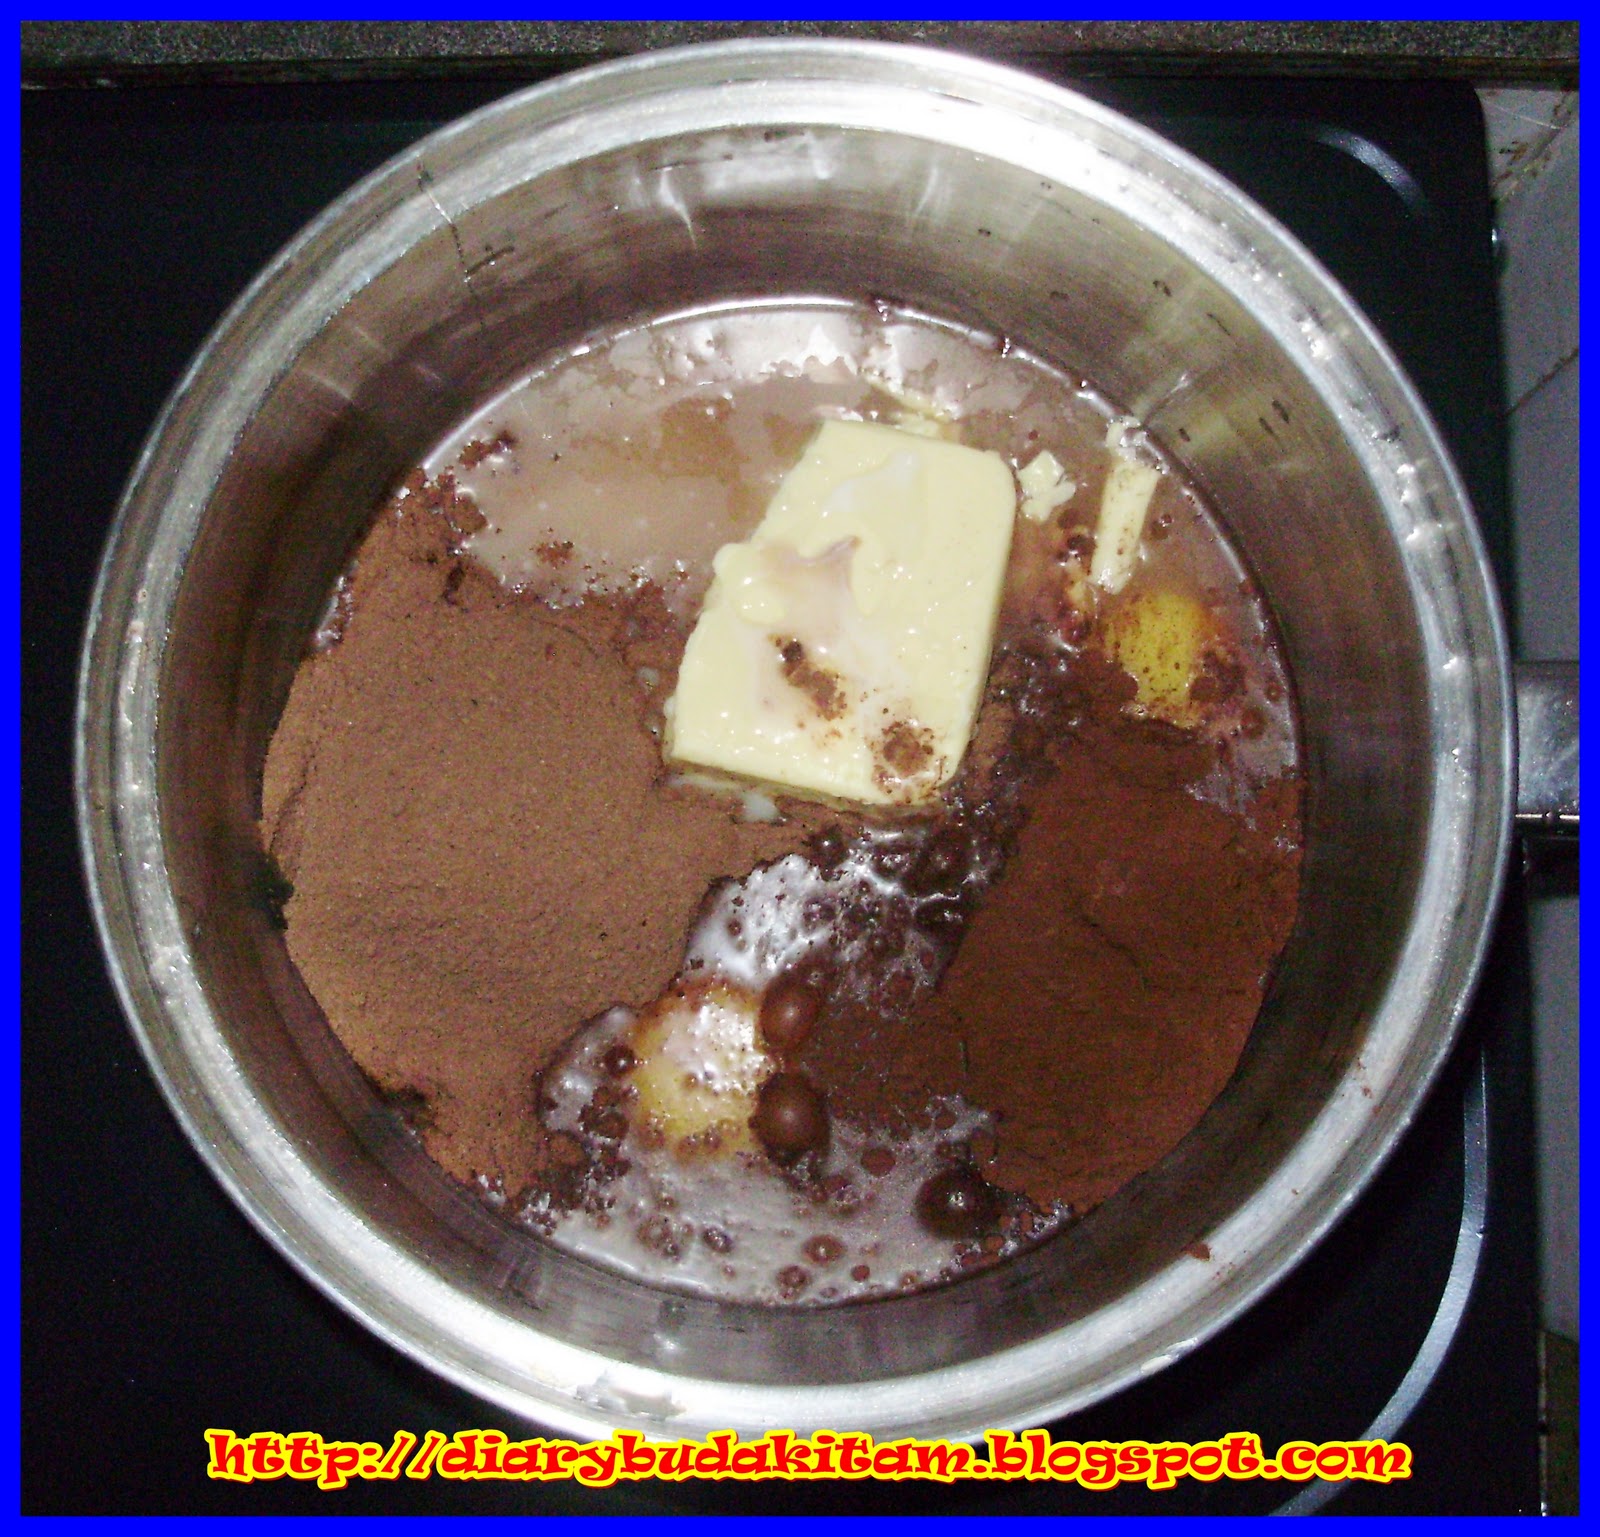 Resepi Kek Batik Biskut Marie Azie Kitchen - Rungon a